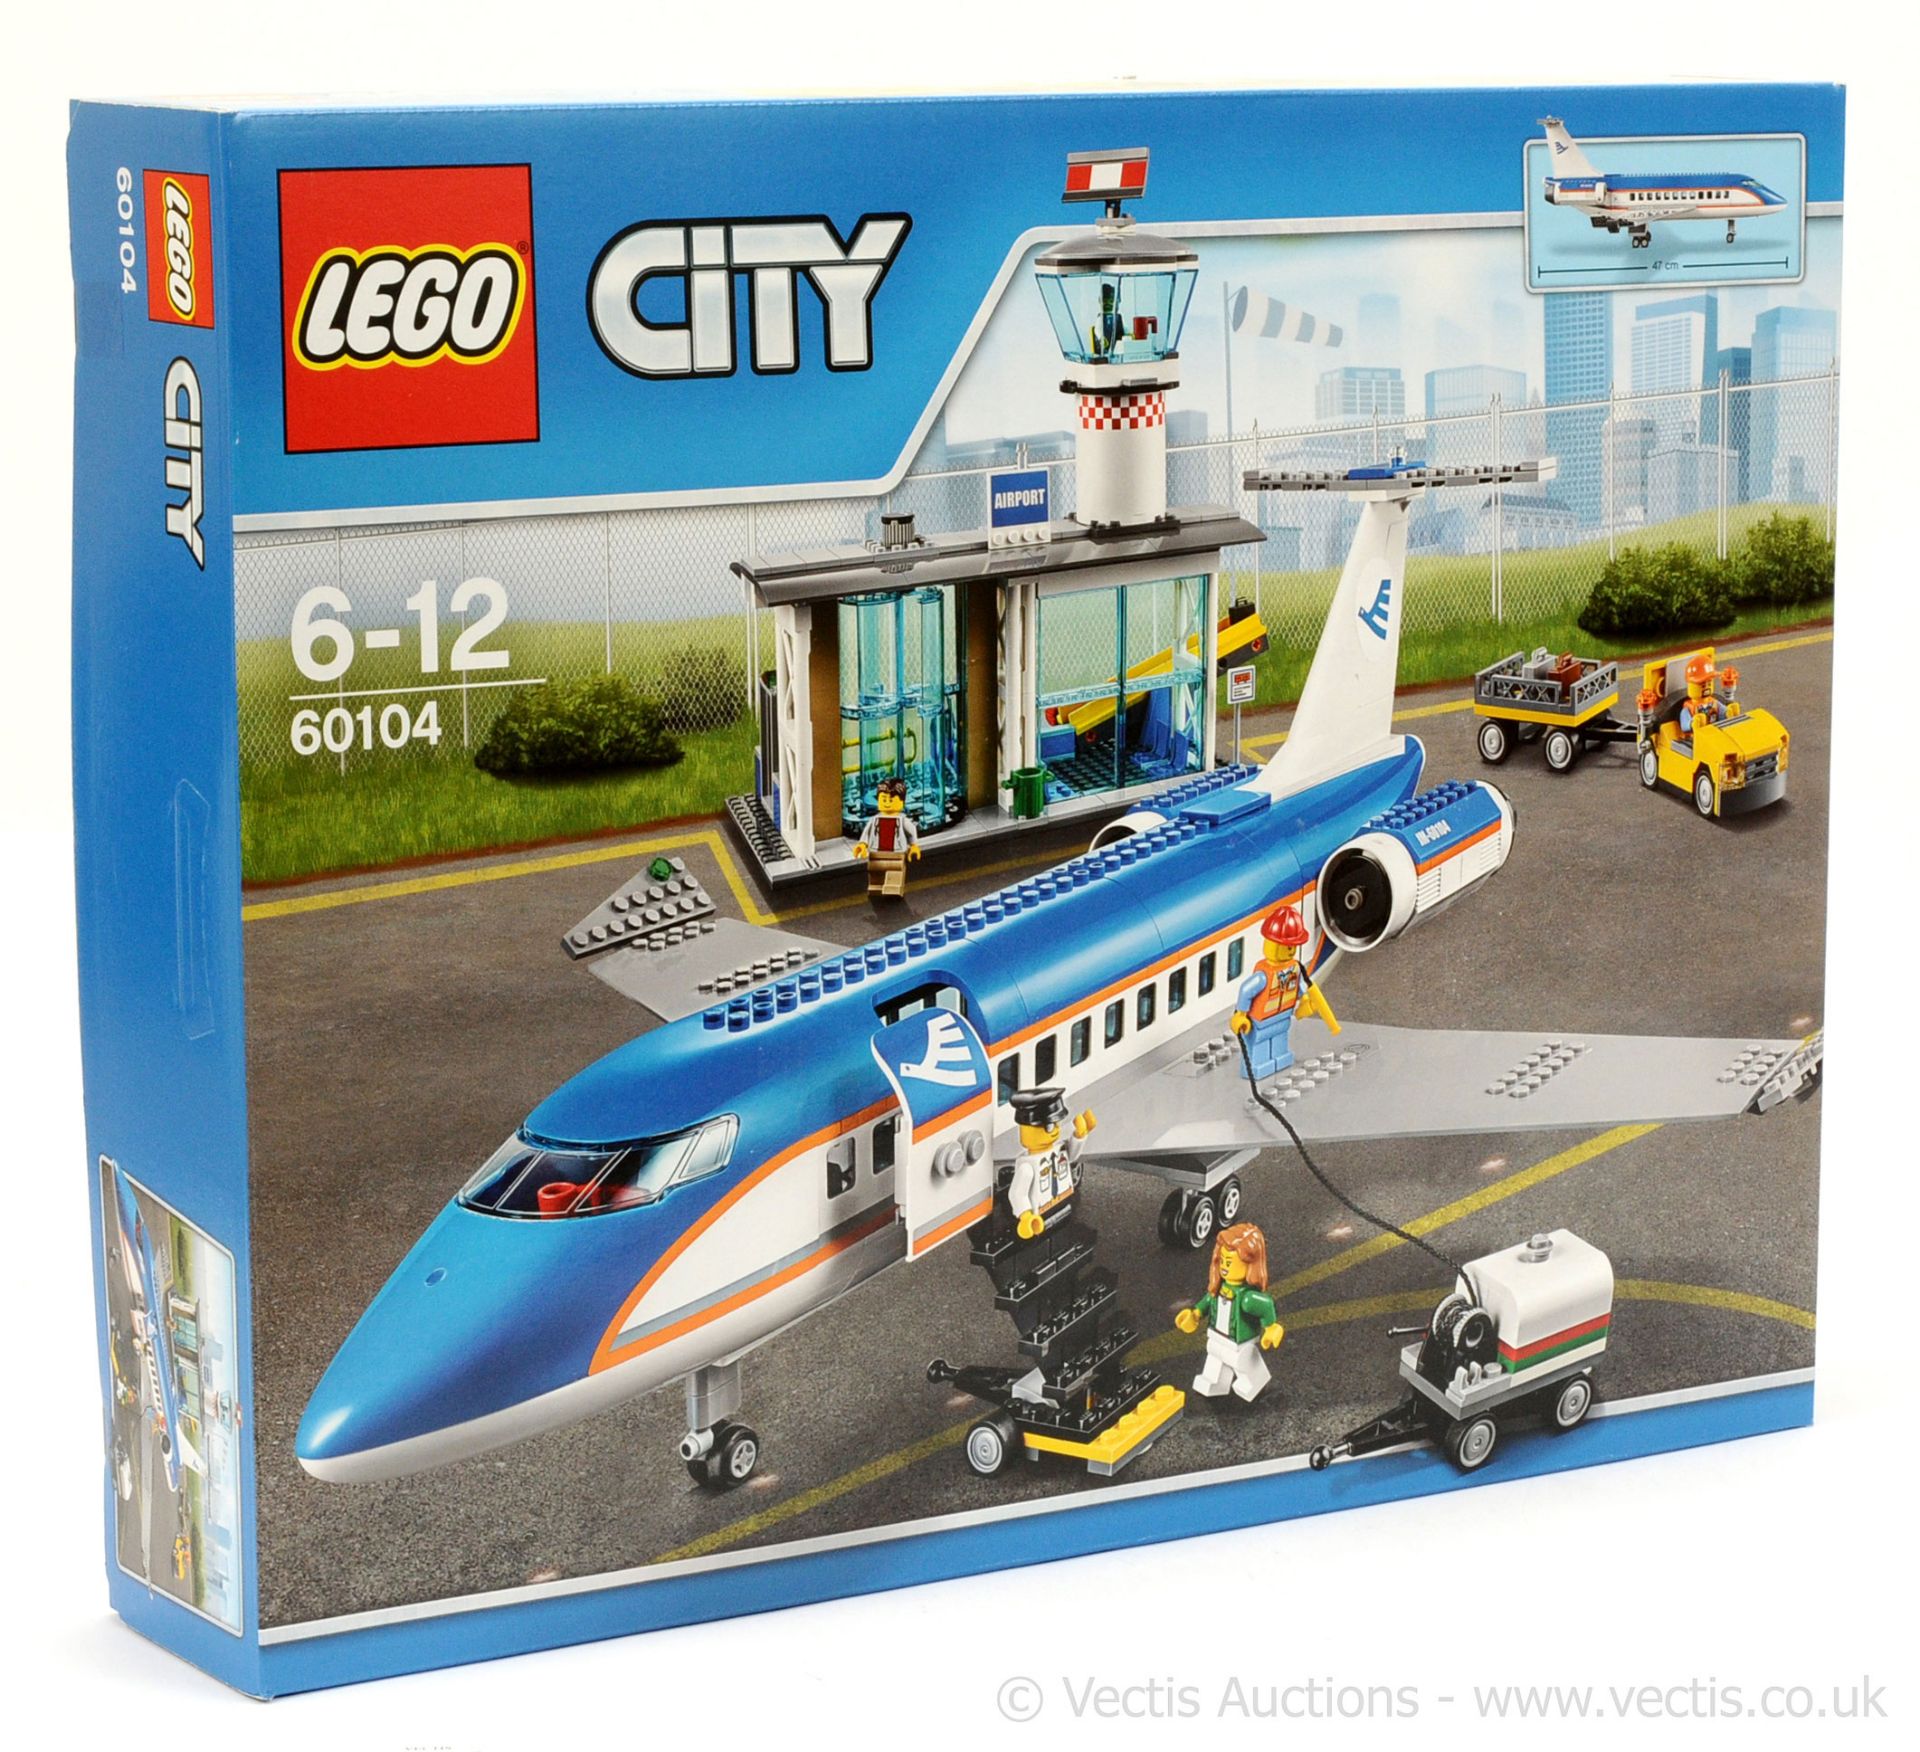 Lego City Airport Passenger Terminal set #60104